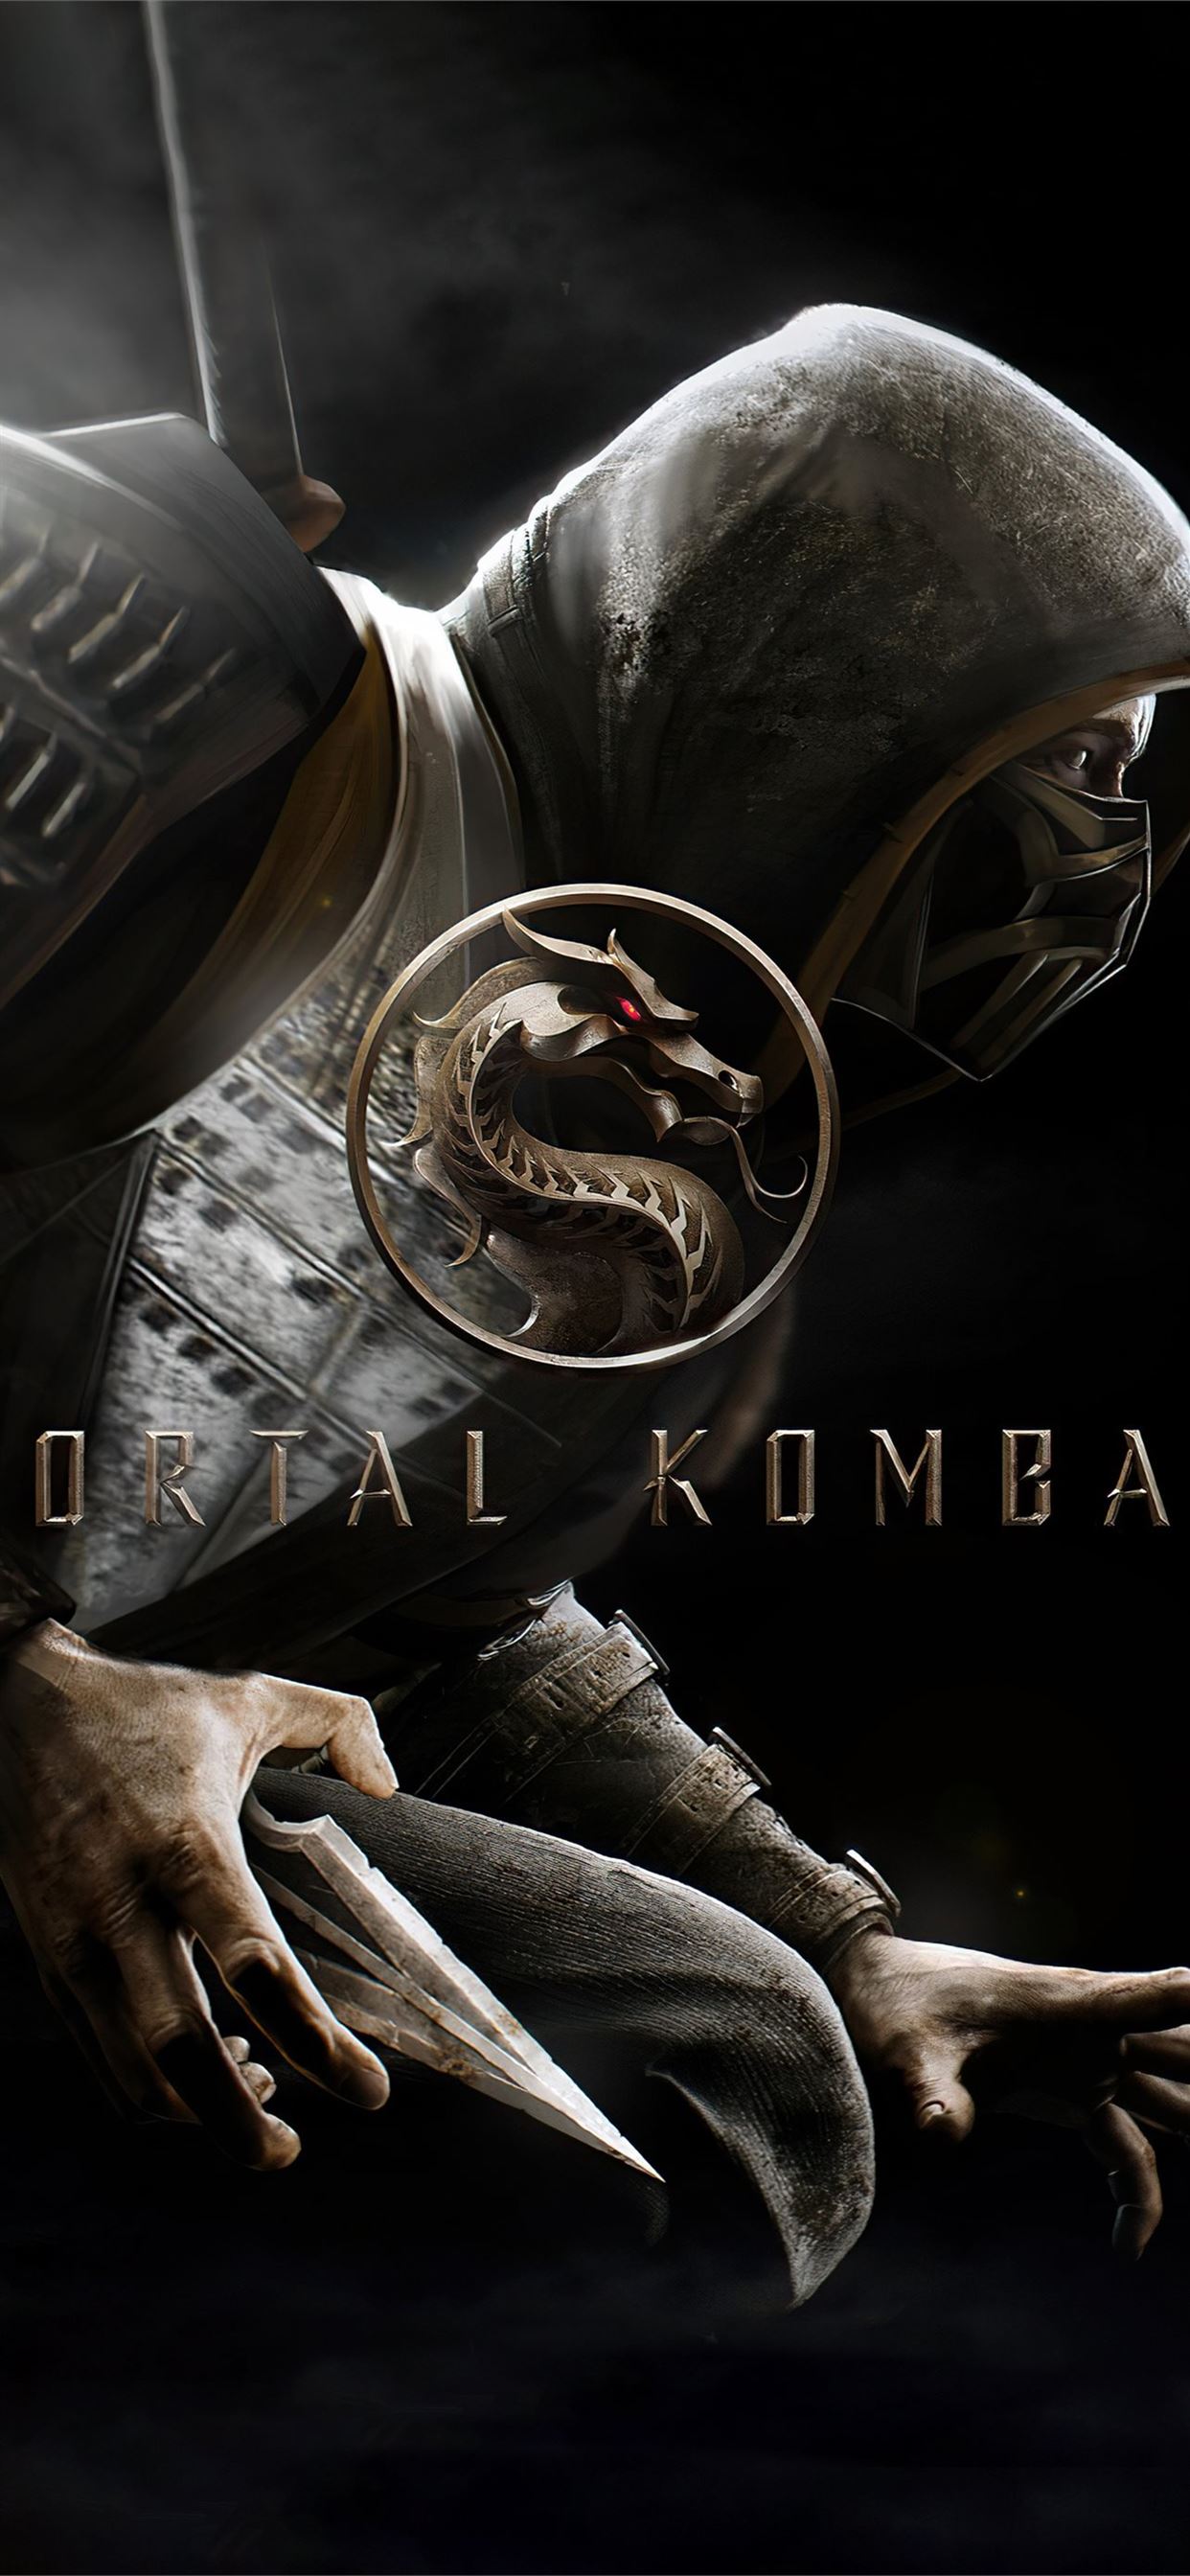 Mortal Kombat (2021) 4K HD Mortal Kombat Wallpapers